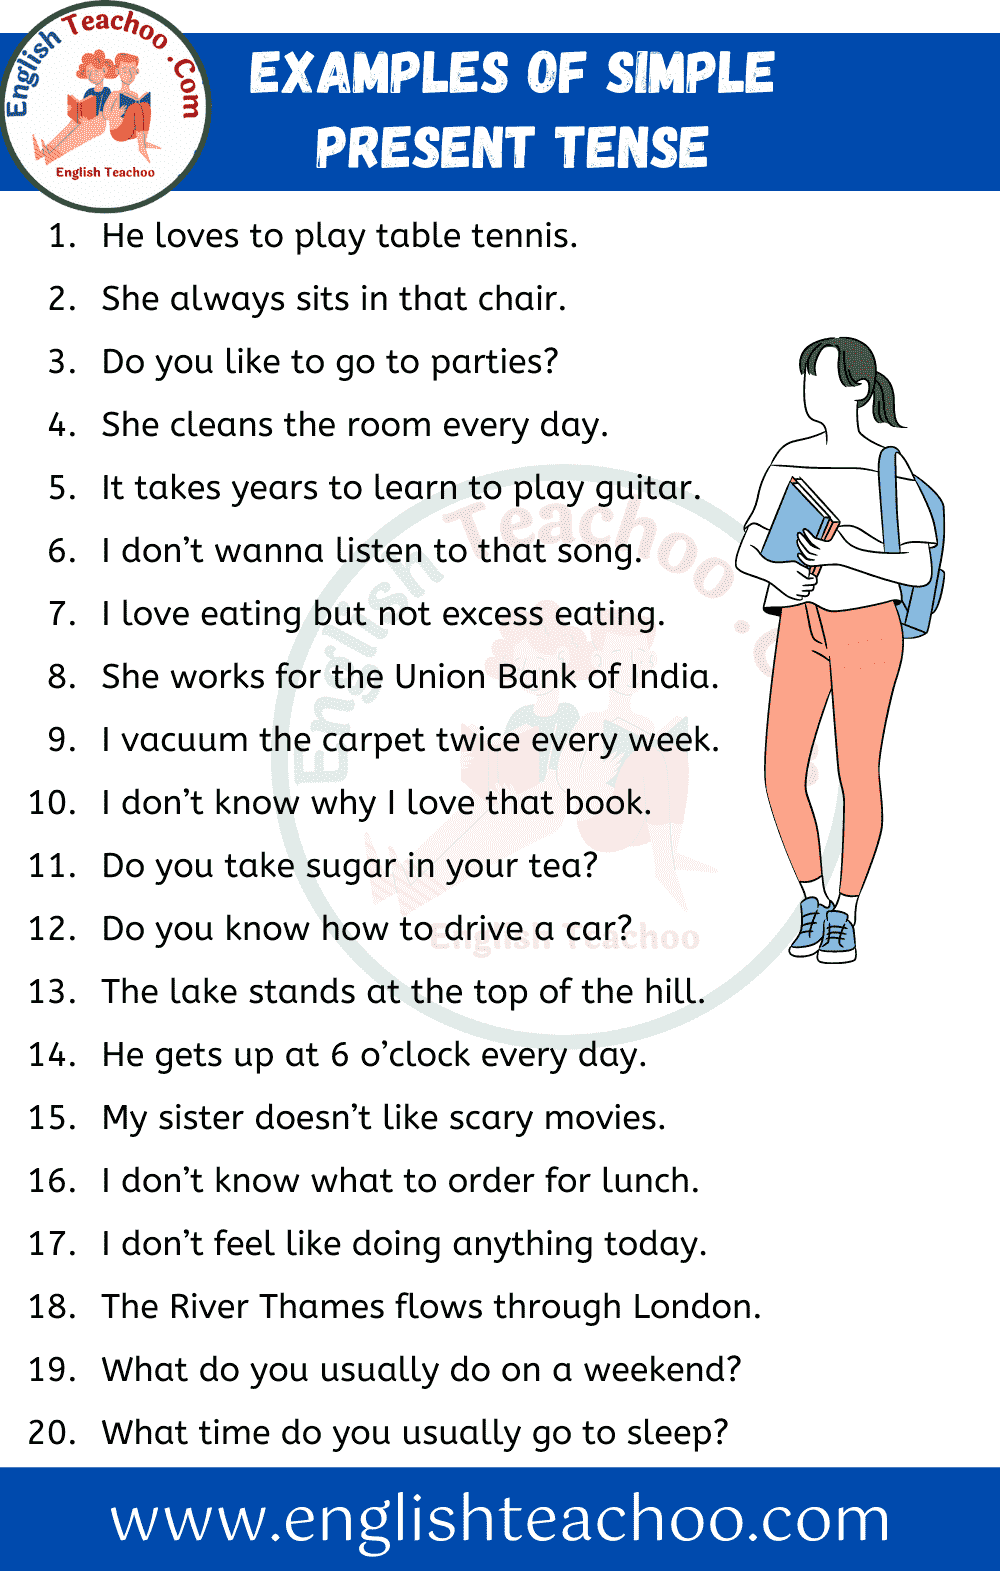 Examples of Simple Present Tense Sentences